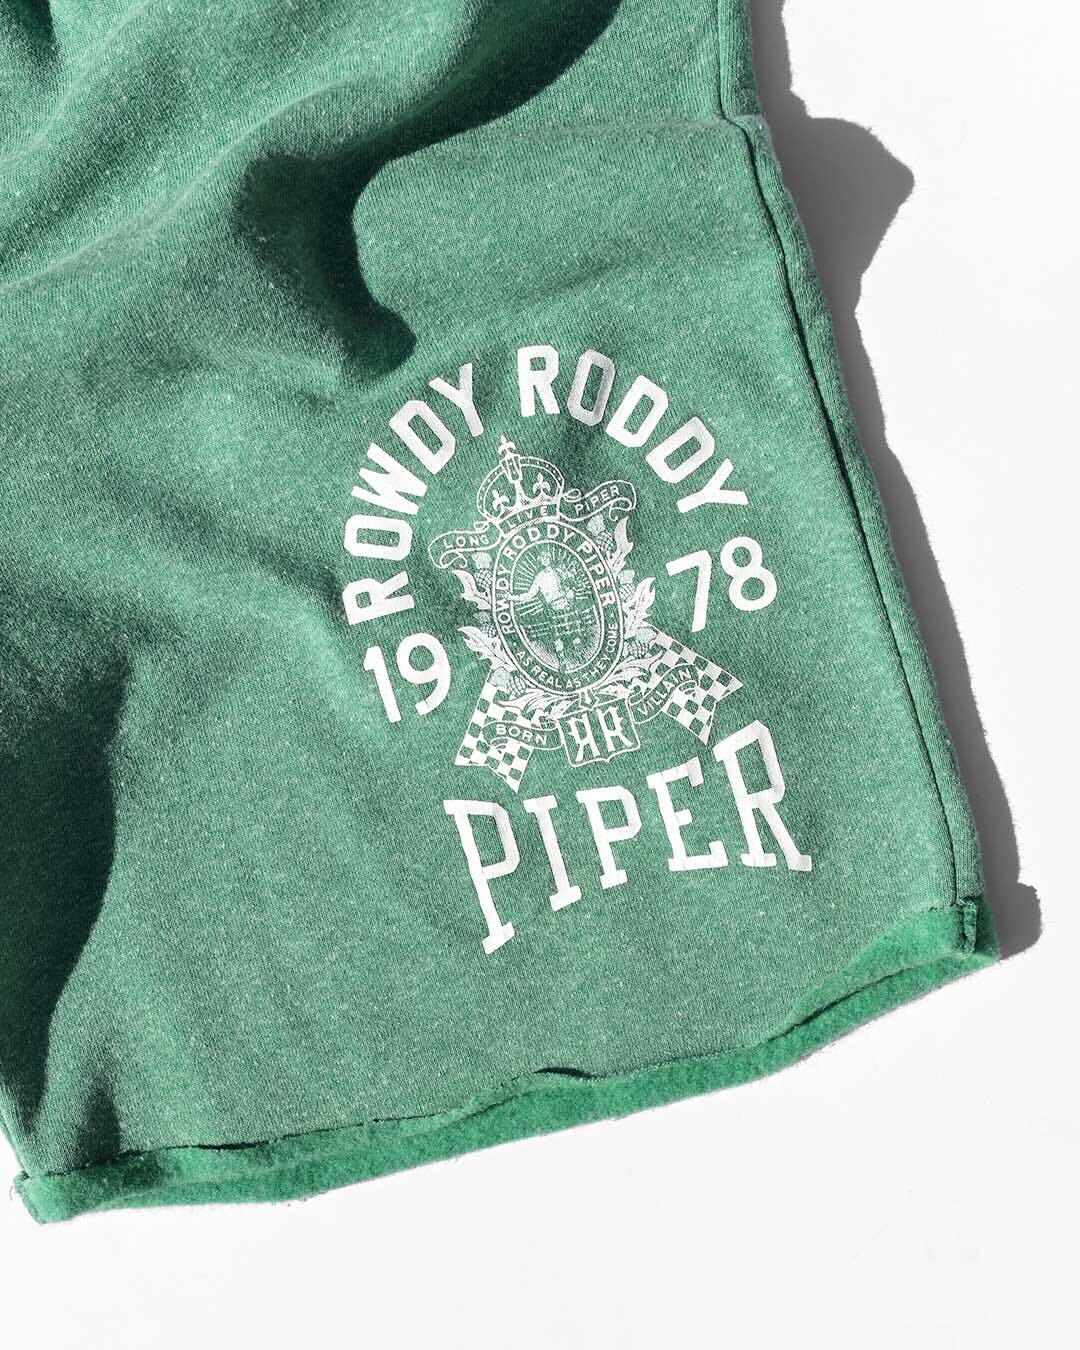 Rowdy Roddy Piper Born Villain Green Shorts - Roots of Fight